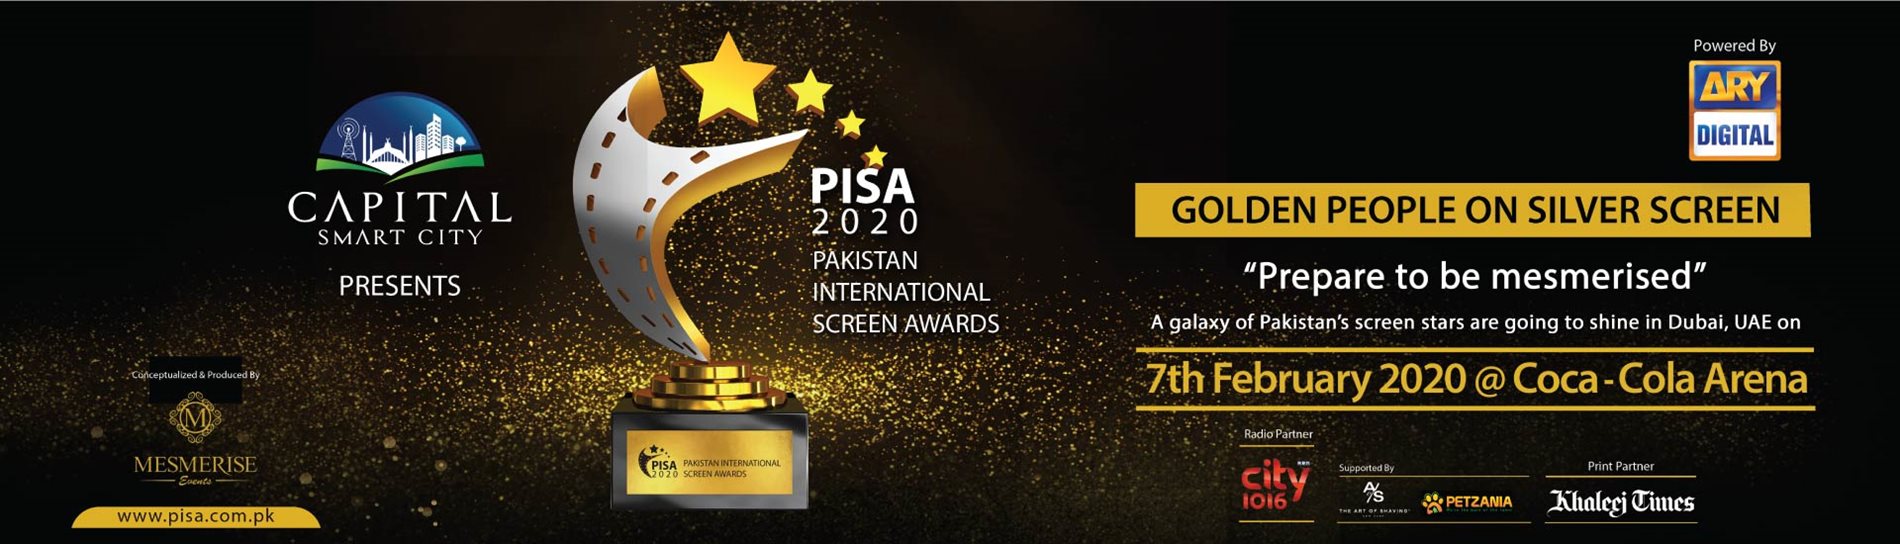 Pakistan International Screen Awards on Feb 7th at Coca-Cola Arena Dubai